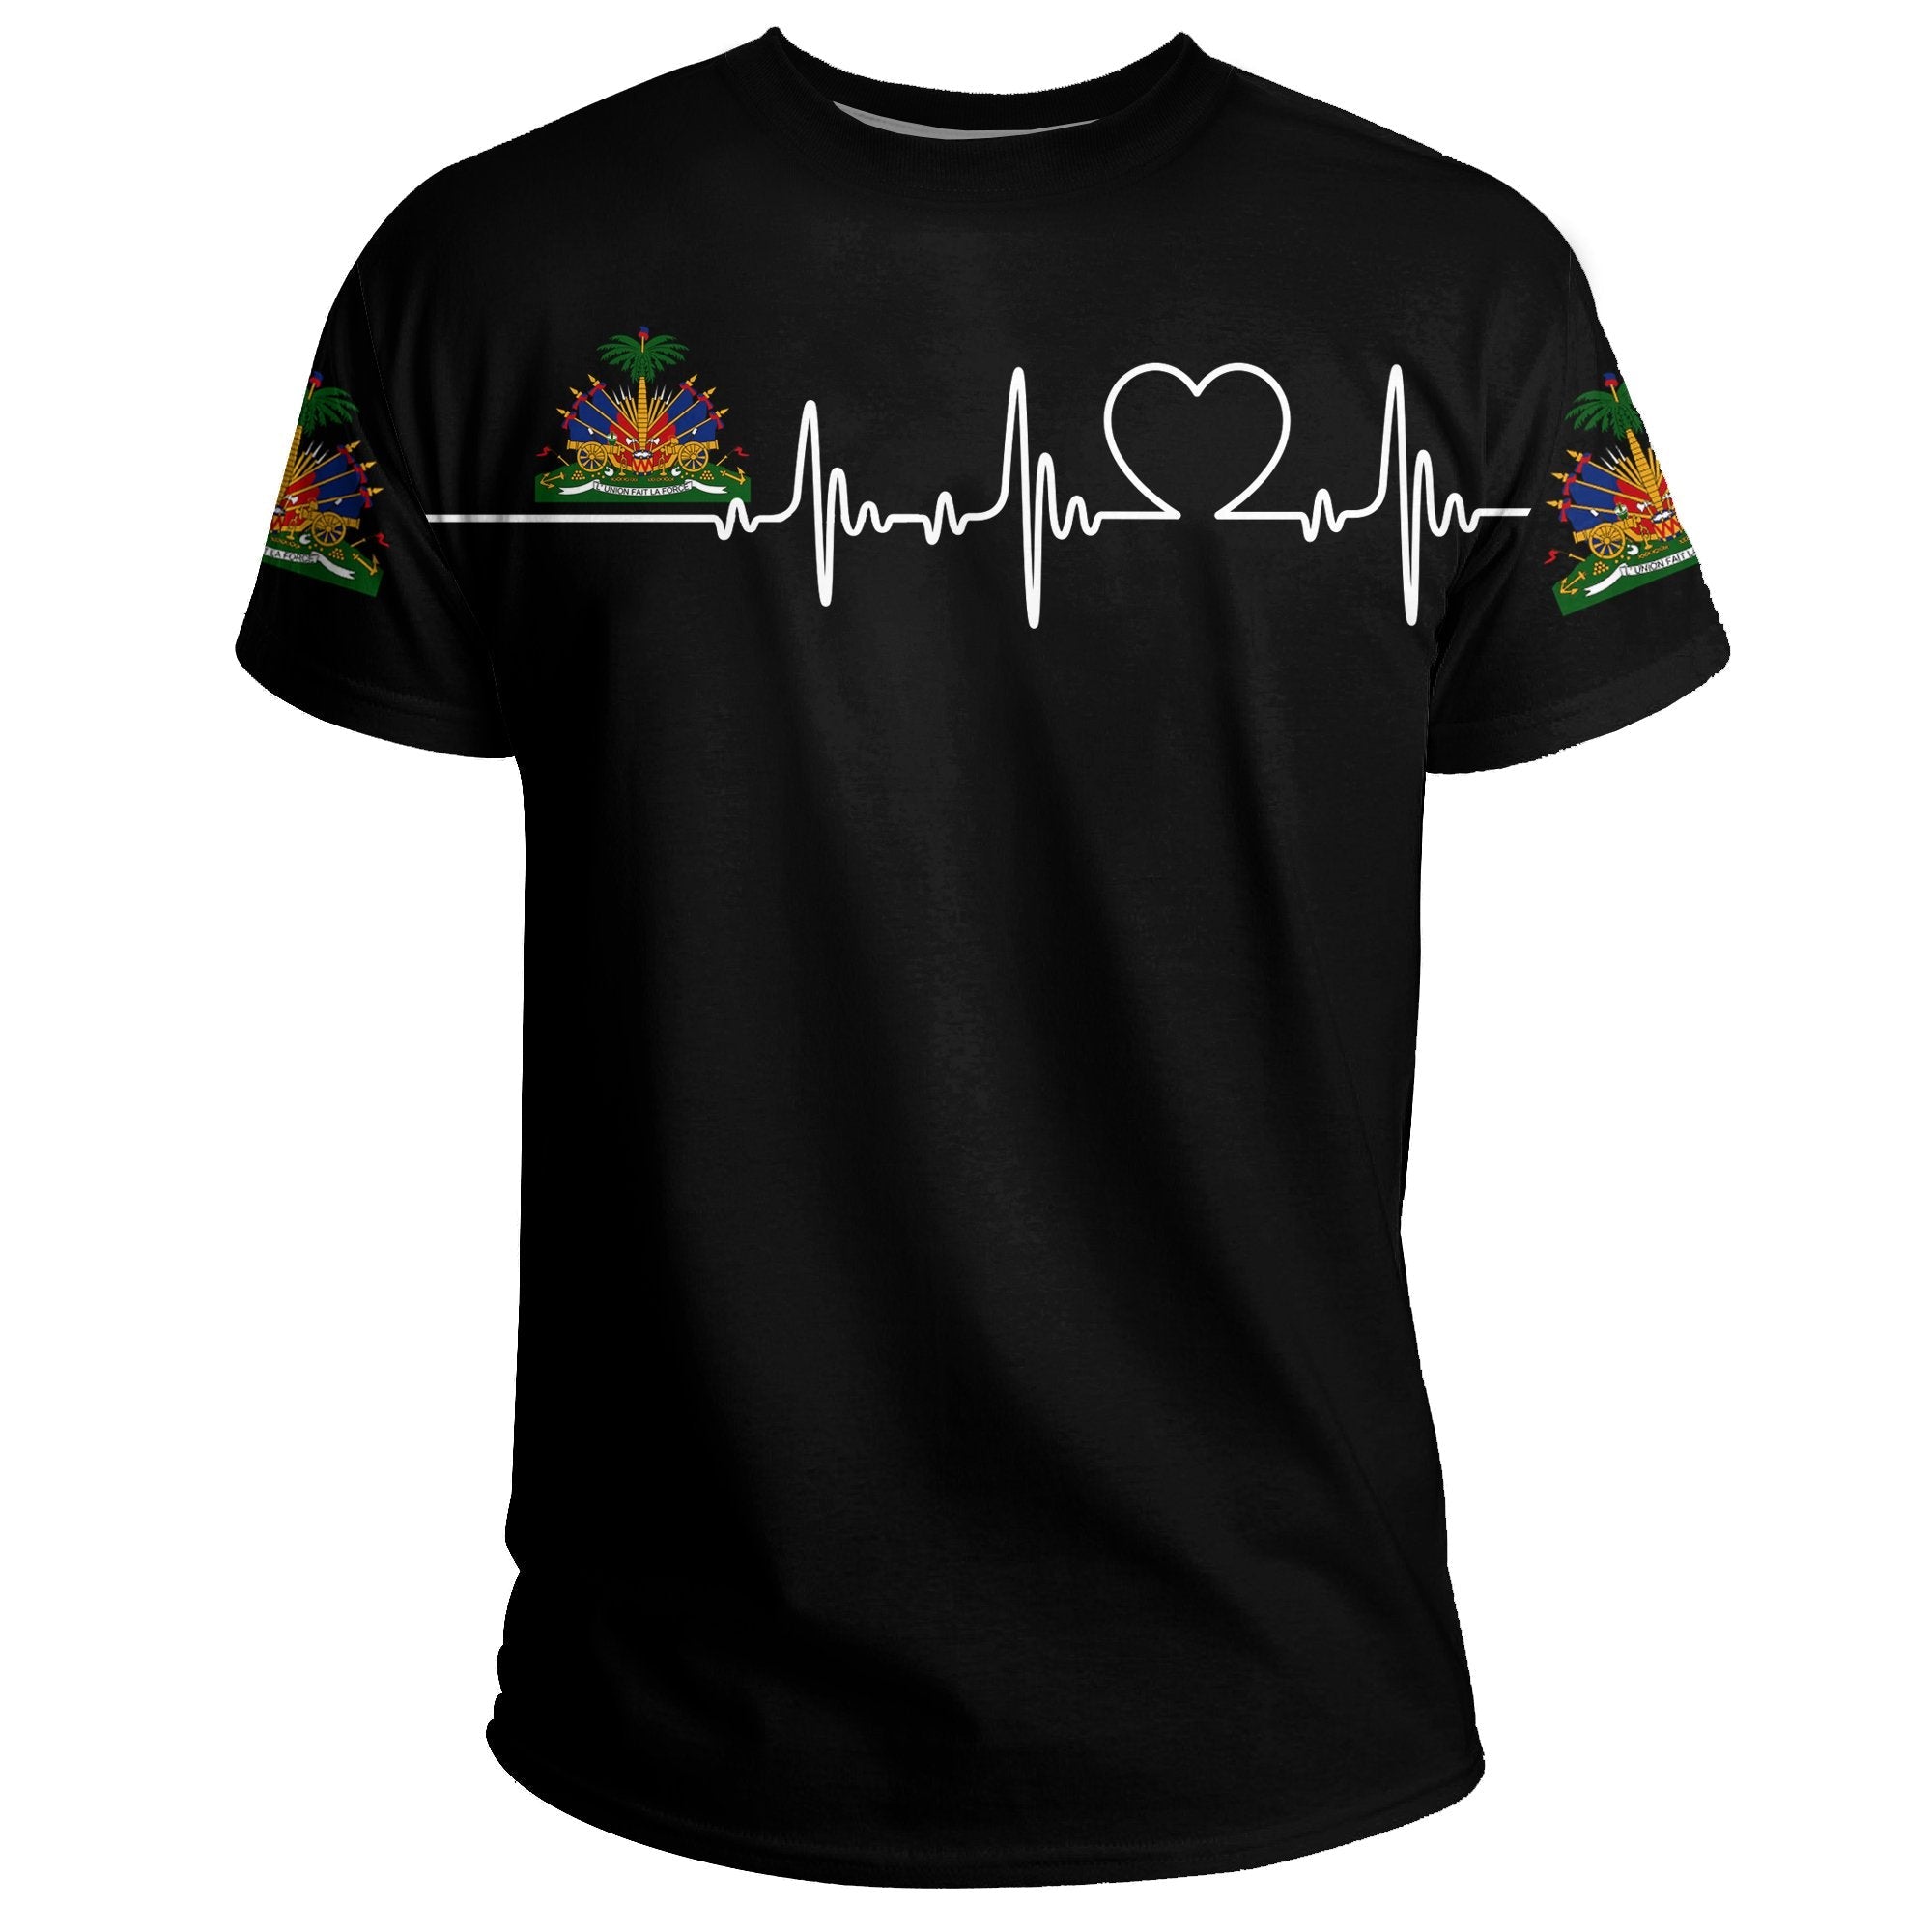 haiti-t-shirt-heartbeat-womensmens